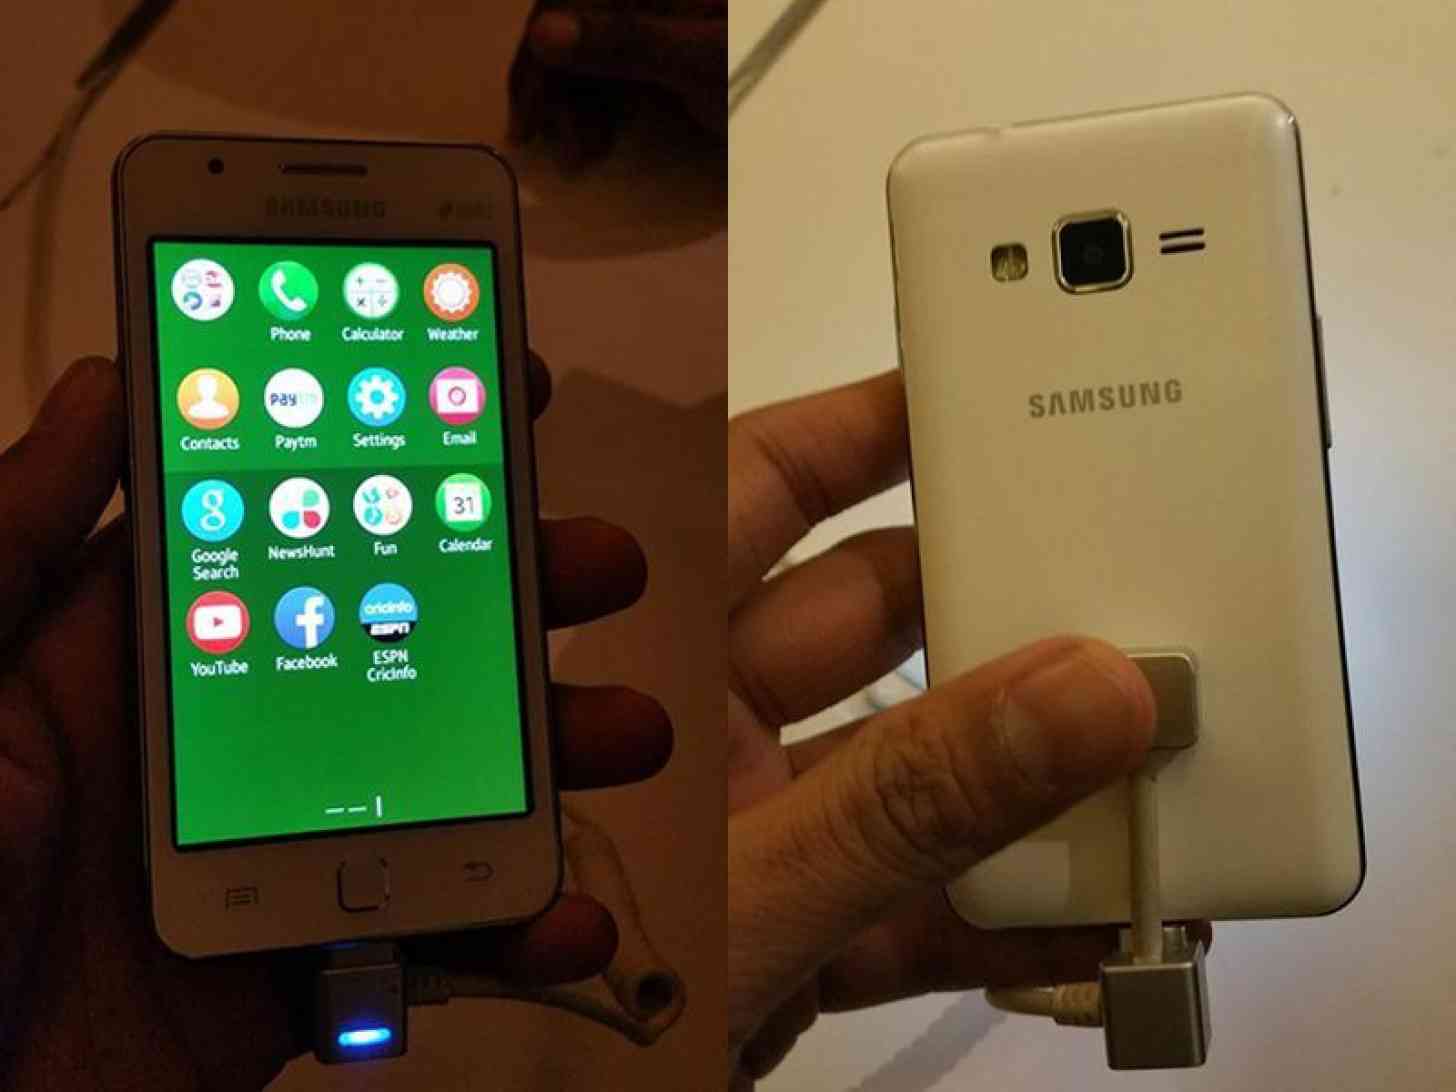 Samsung Z1 Tizen smartphone leak